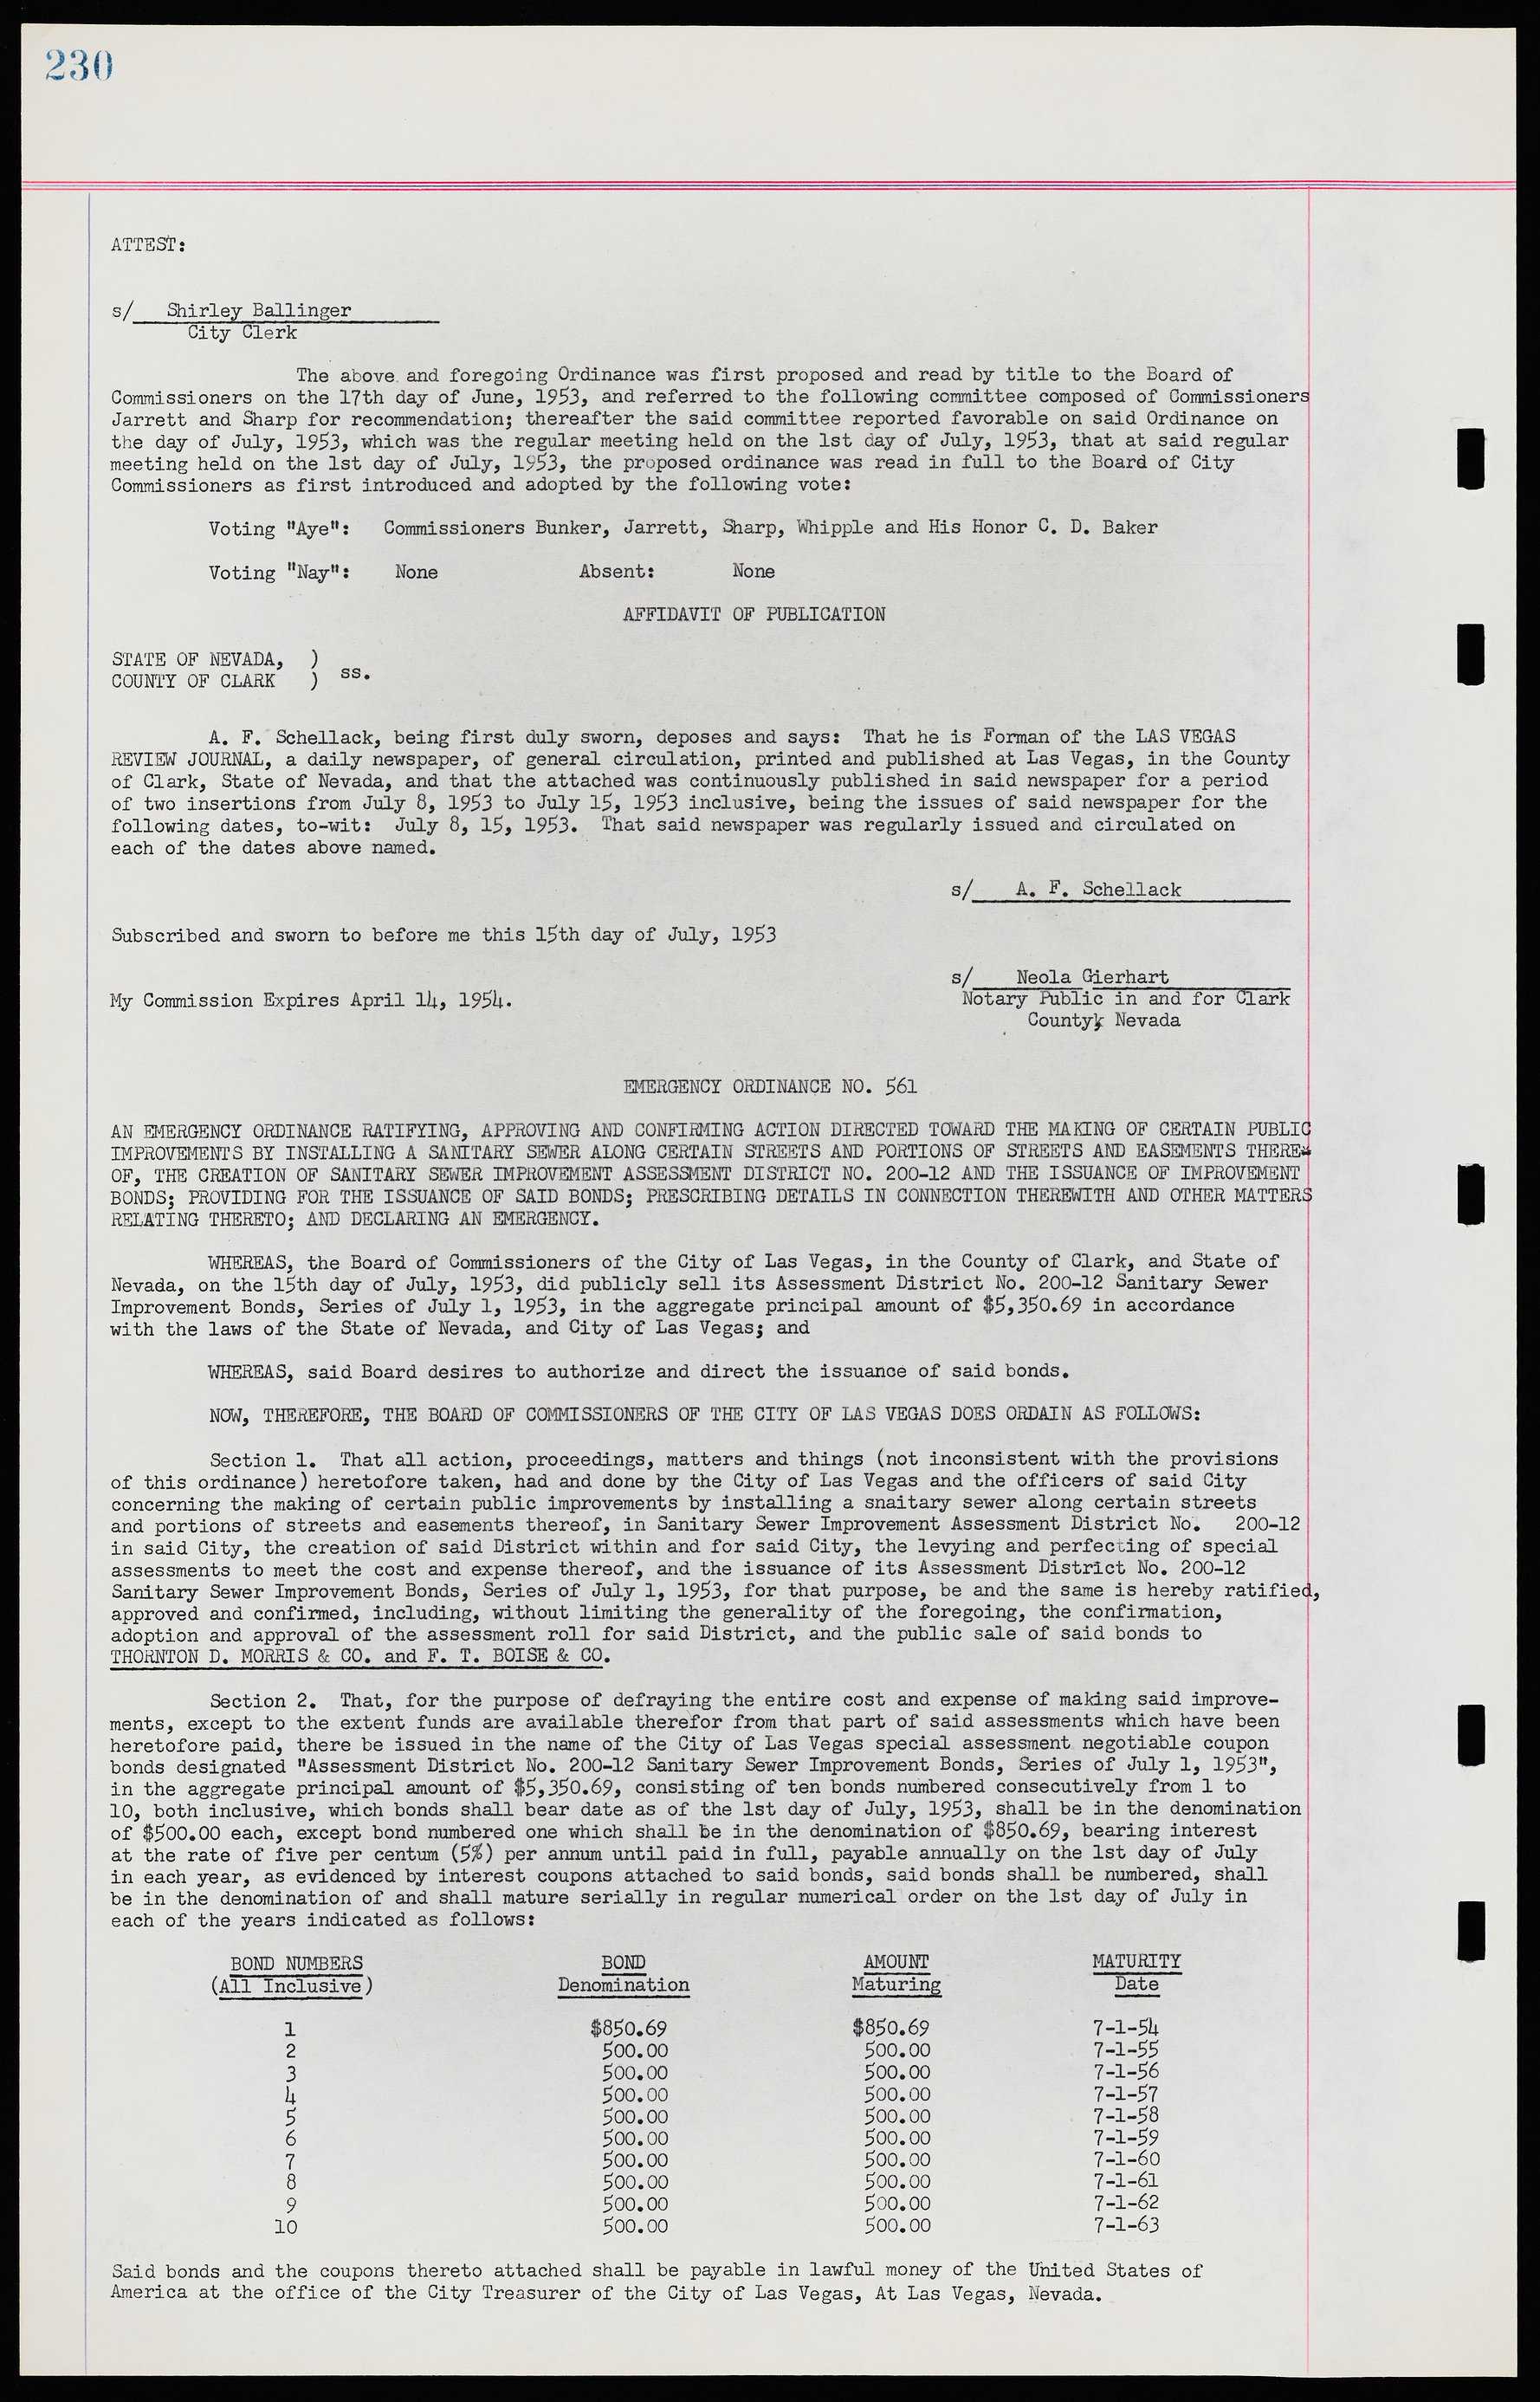 Las Vegas City Ordinances, November 13, 1950 to August 6, 1958, lvc000015-238